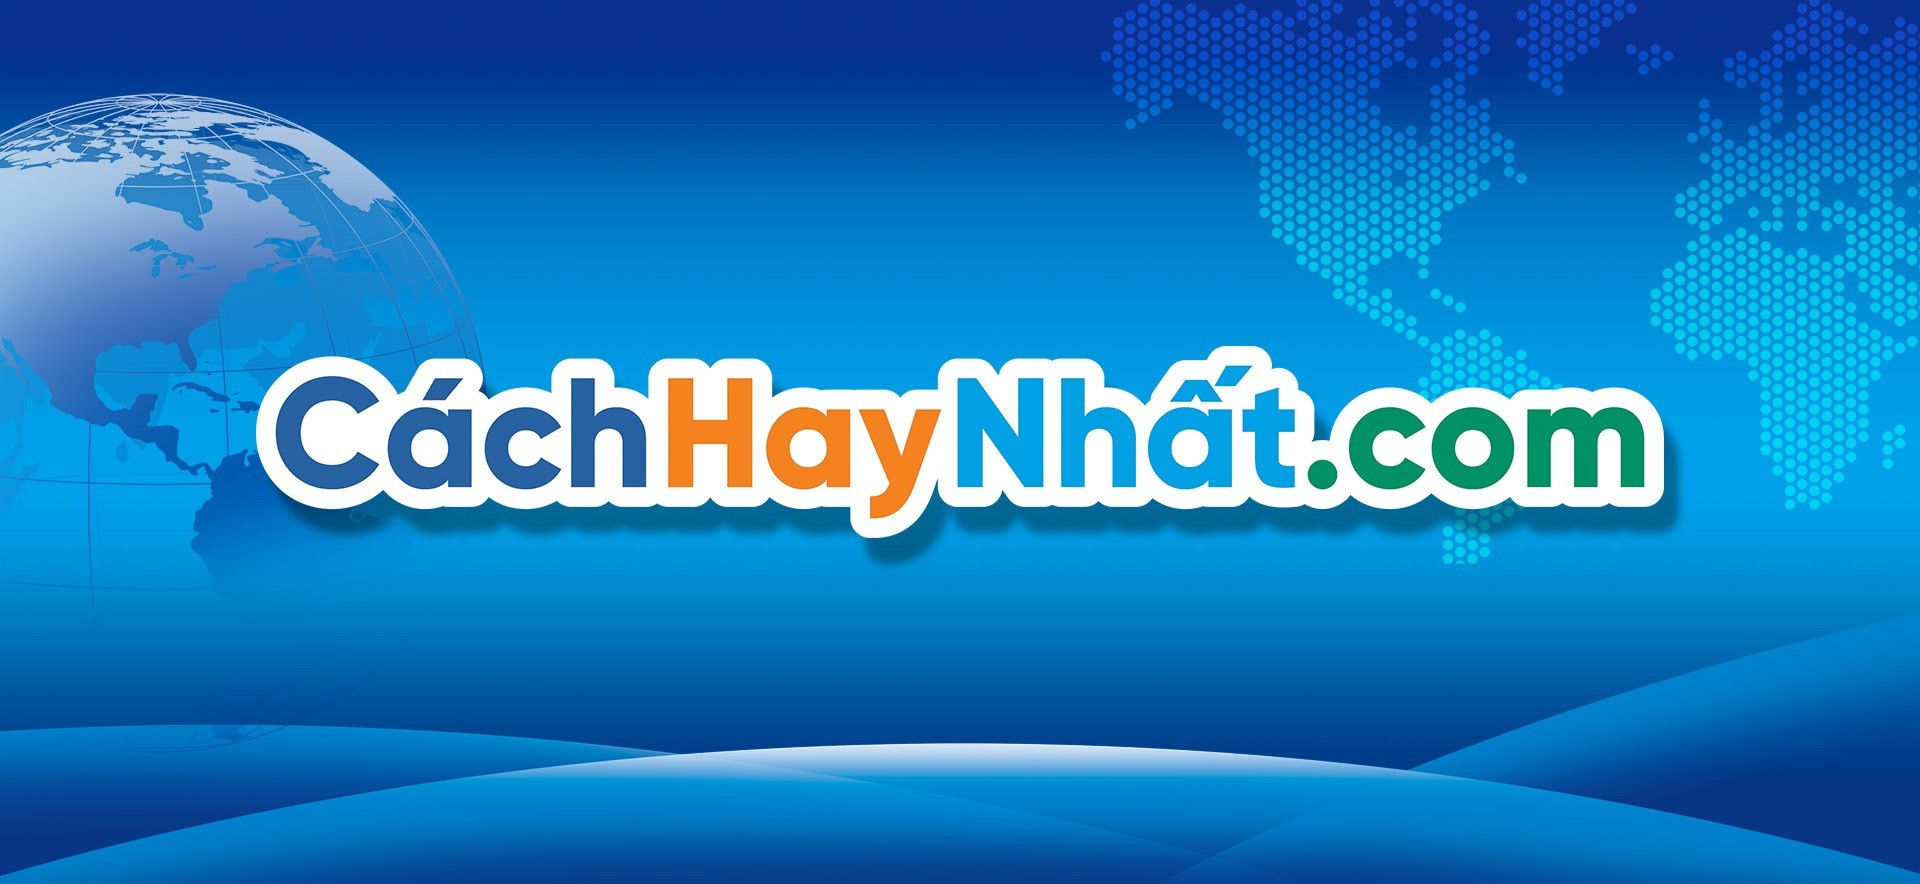 www.cachhaynhat.com